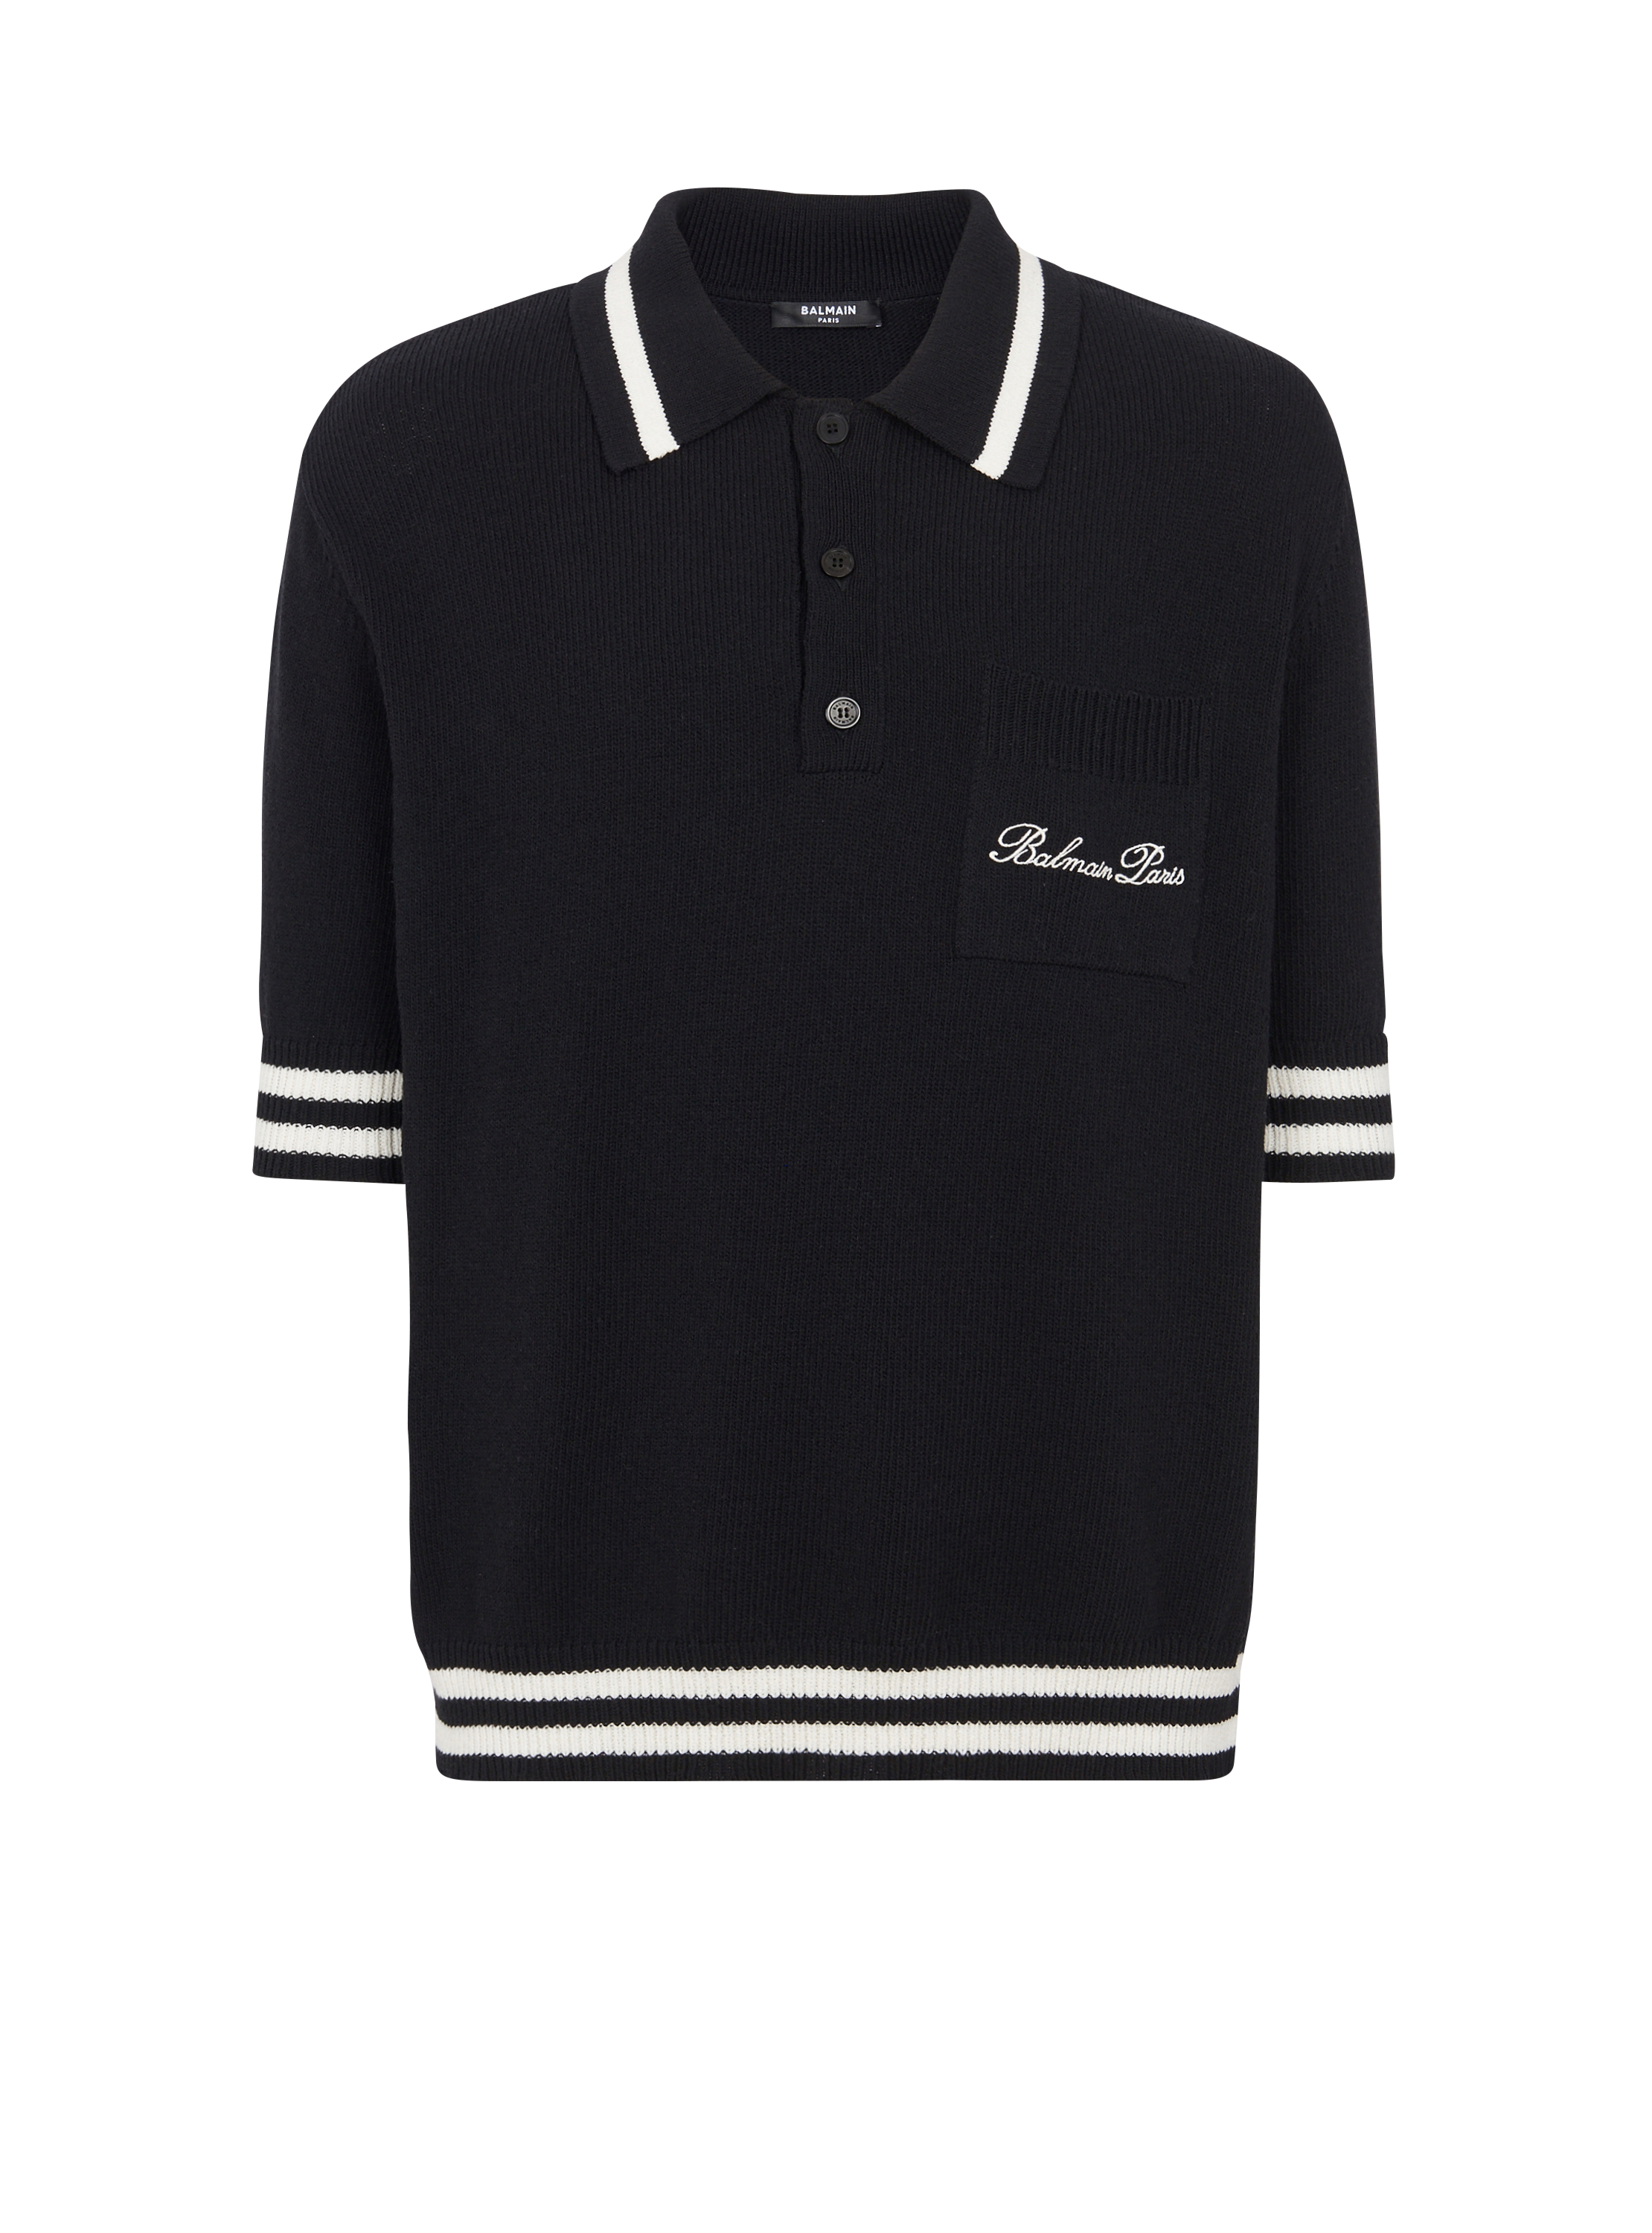 Balmain Signature polo shirt, black, hi-res